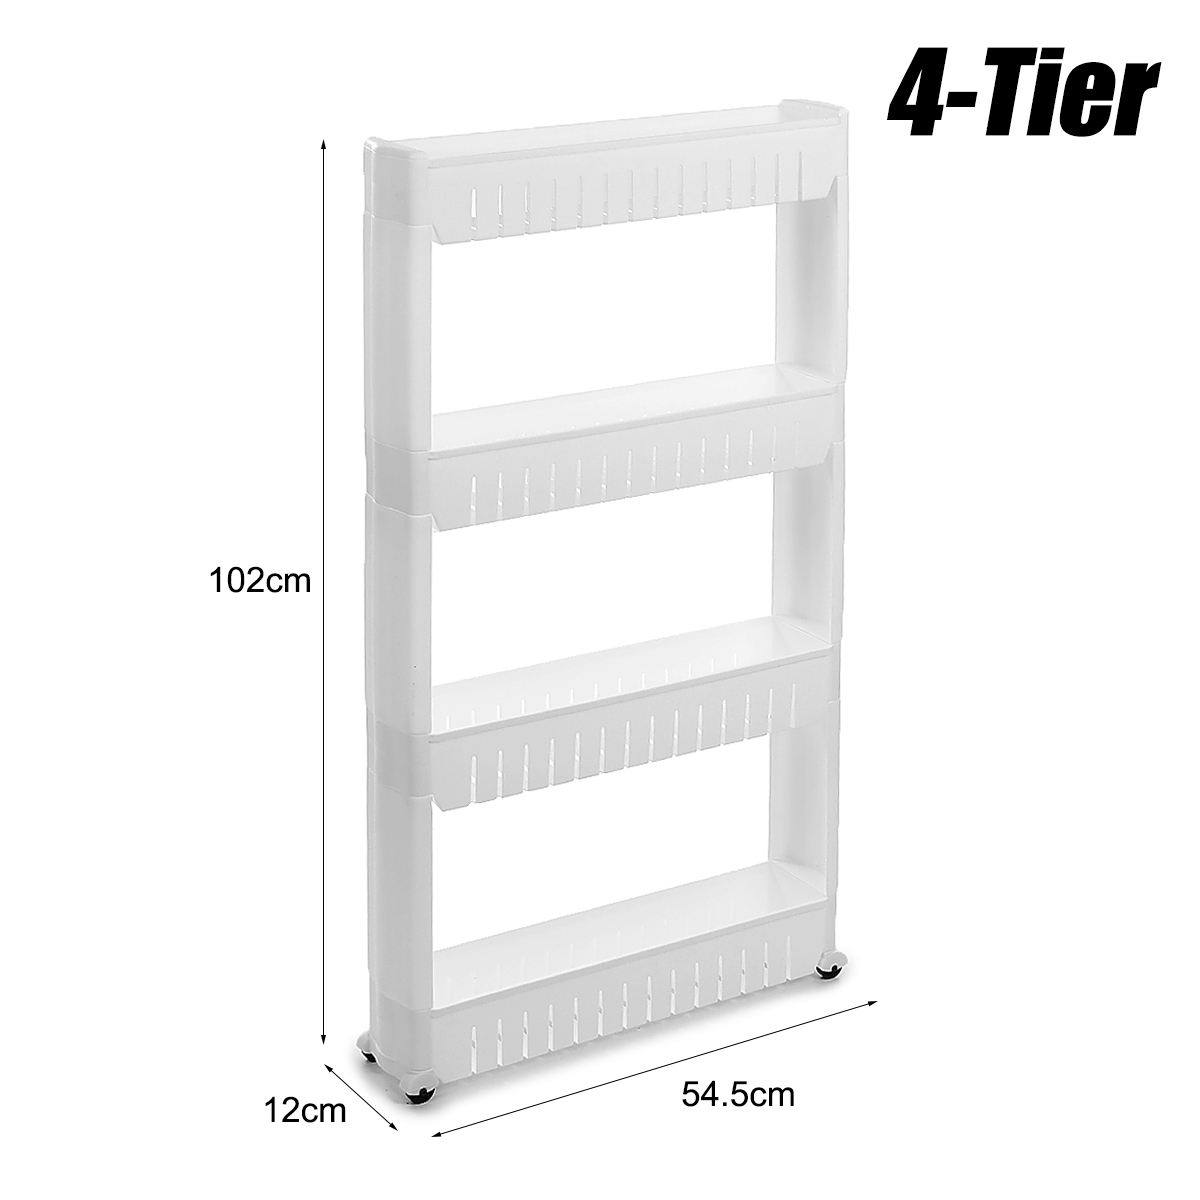 345-Tier-Slim-Slide-Out-Trolley-Storage-Holder-Rack-Organiser-Kitchen-Bathroom-1696979-13